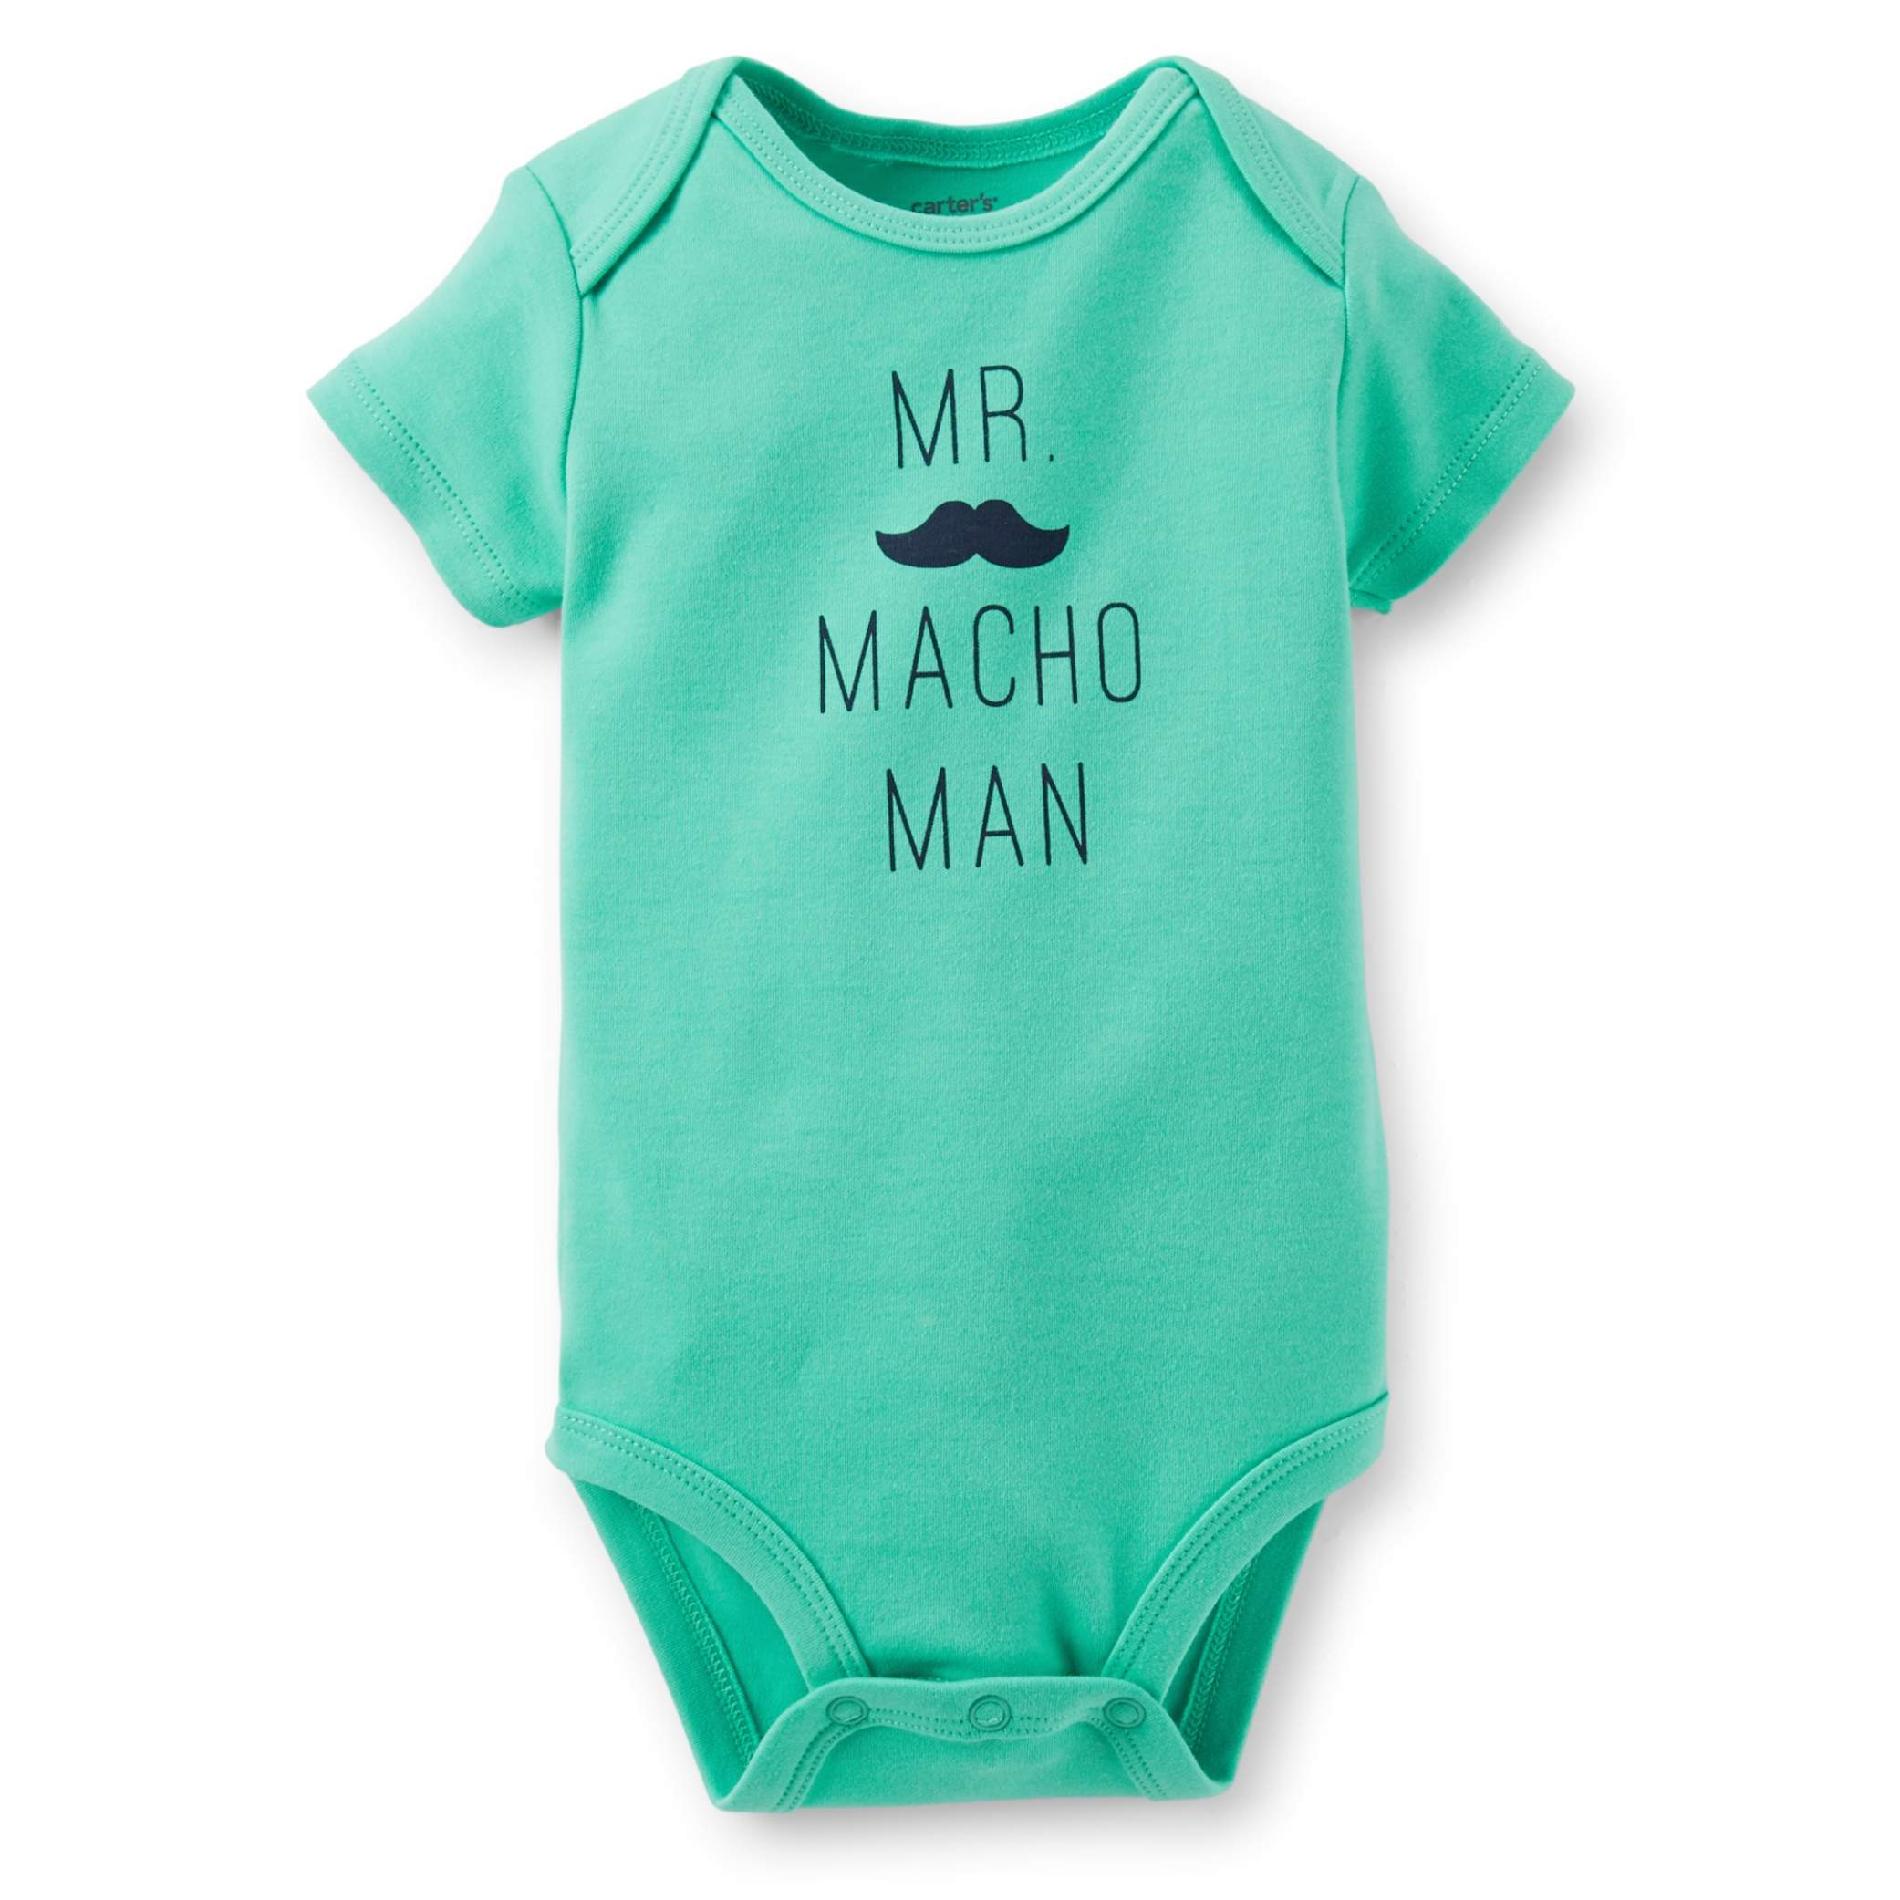 Carter's Newborn Boy's Short-Sleeve Bodysuit - Mr. Macho Man